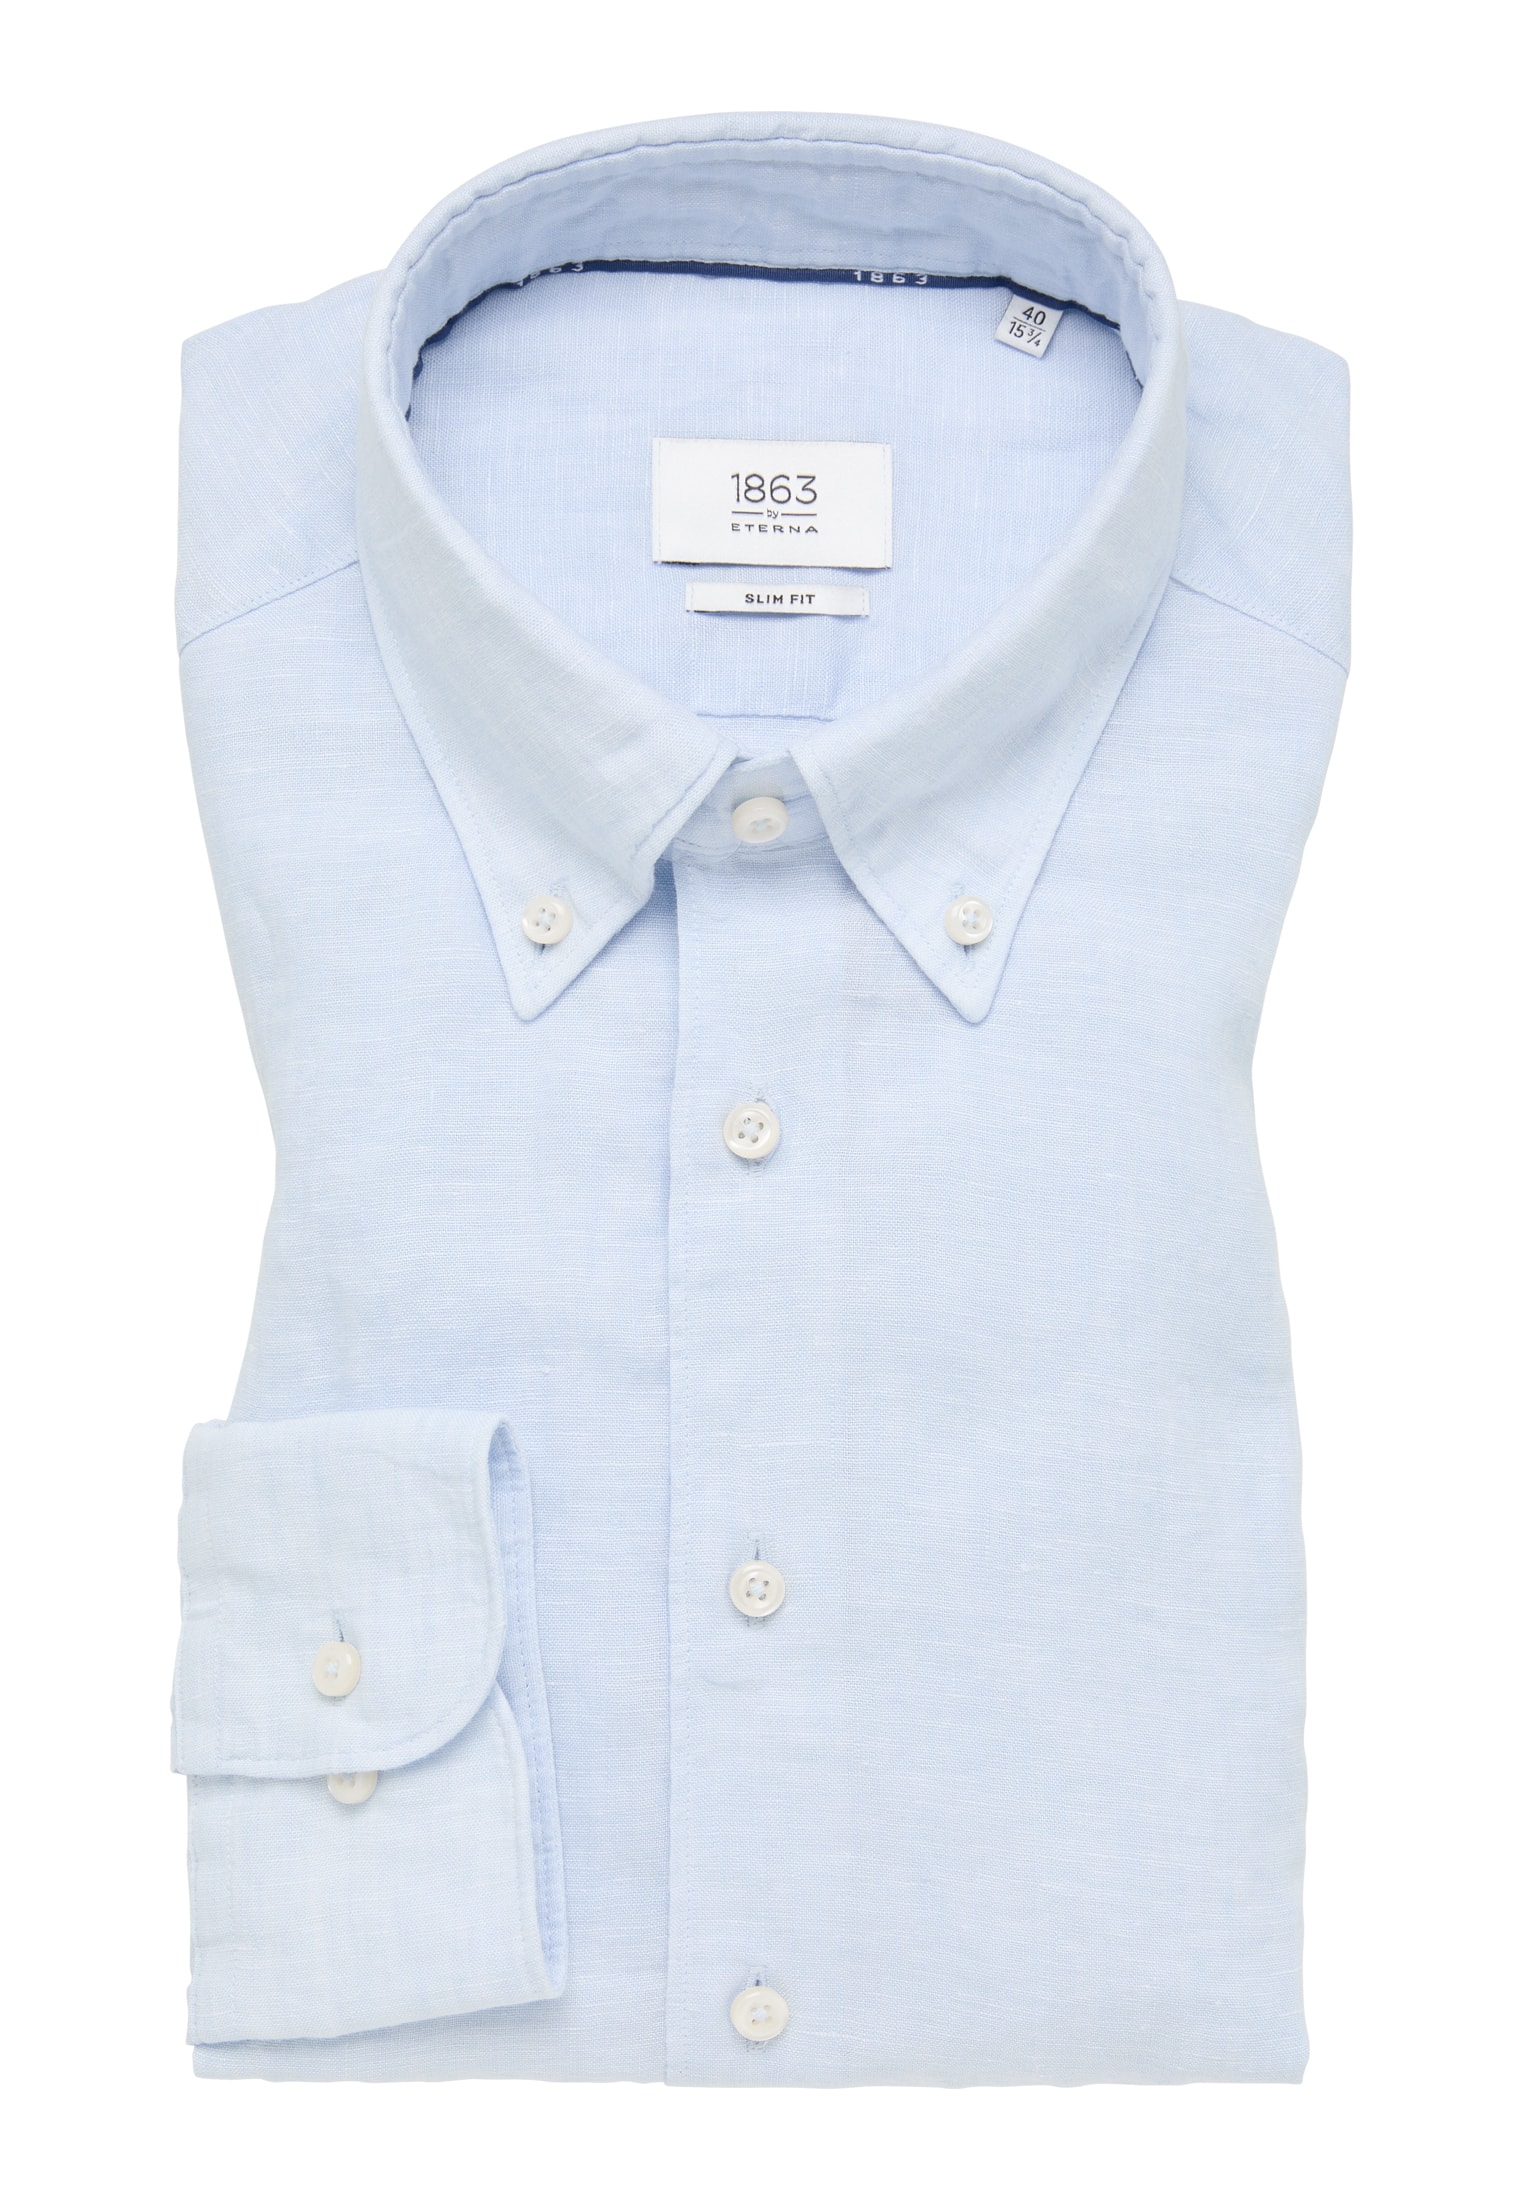 SLIM FIT Shirt in light | blue 40 1SH11907-01-11-40-1/1 long | sleeve light blue | | plain